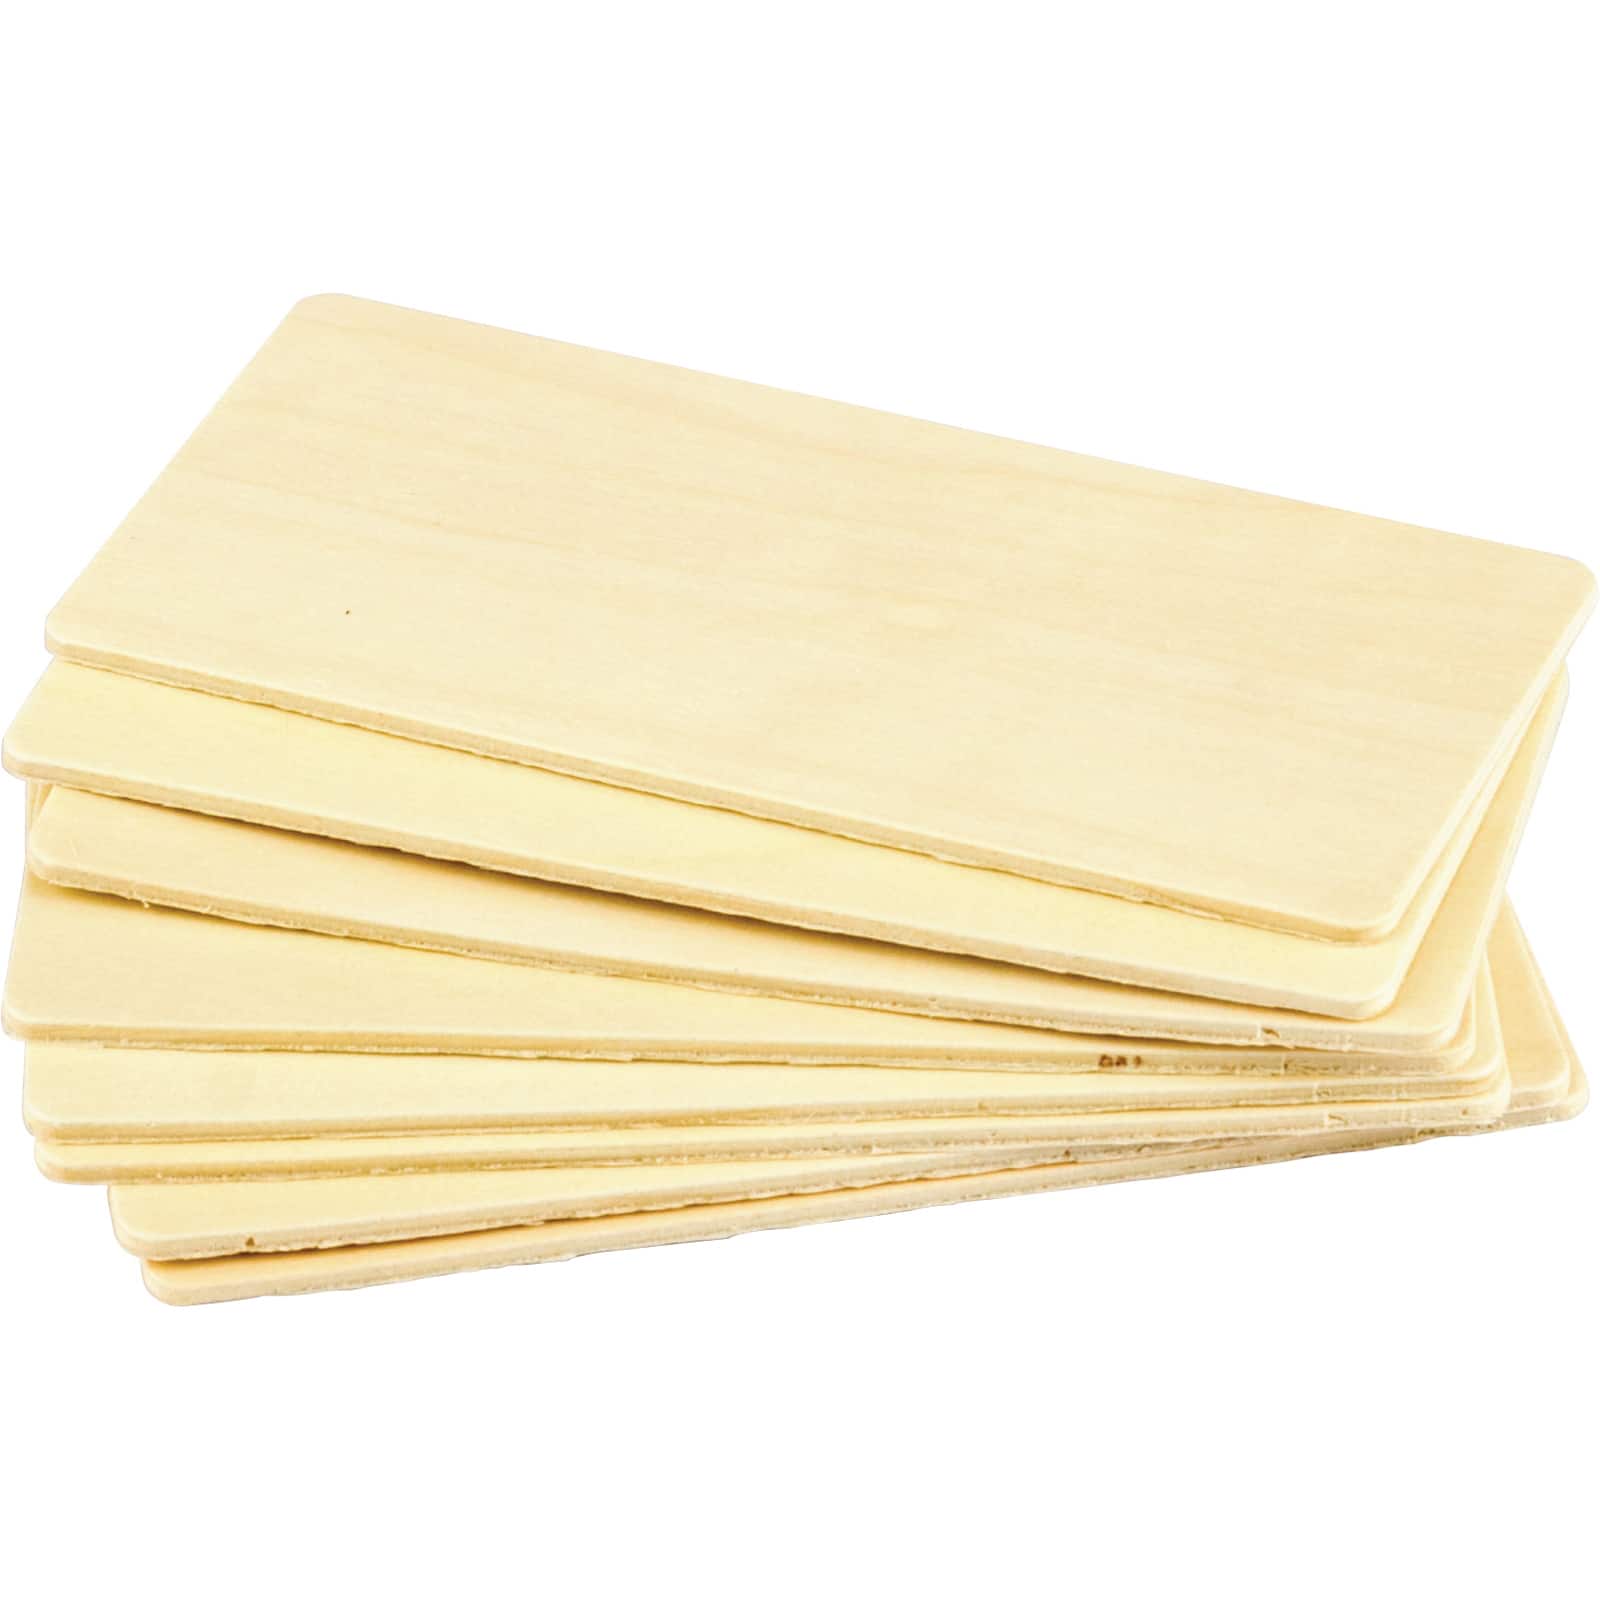 6 Packs: 6 Packs 8 ct. (288 total) Teacher Created Resources STEM Basics Wooden Slats